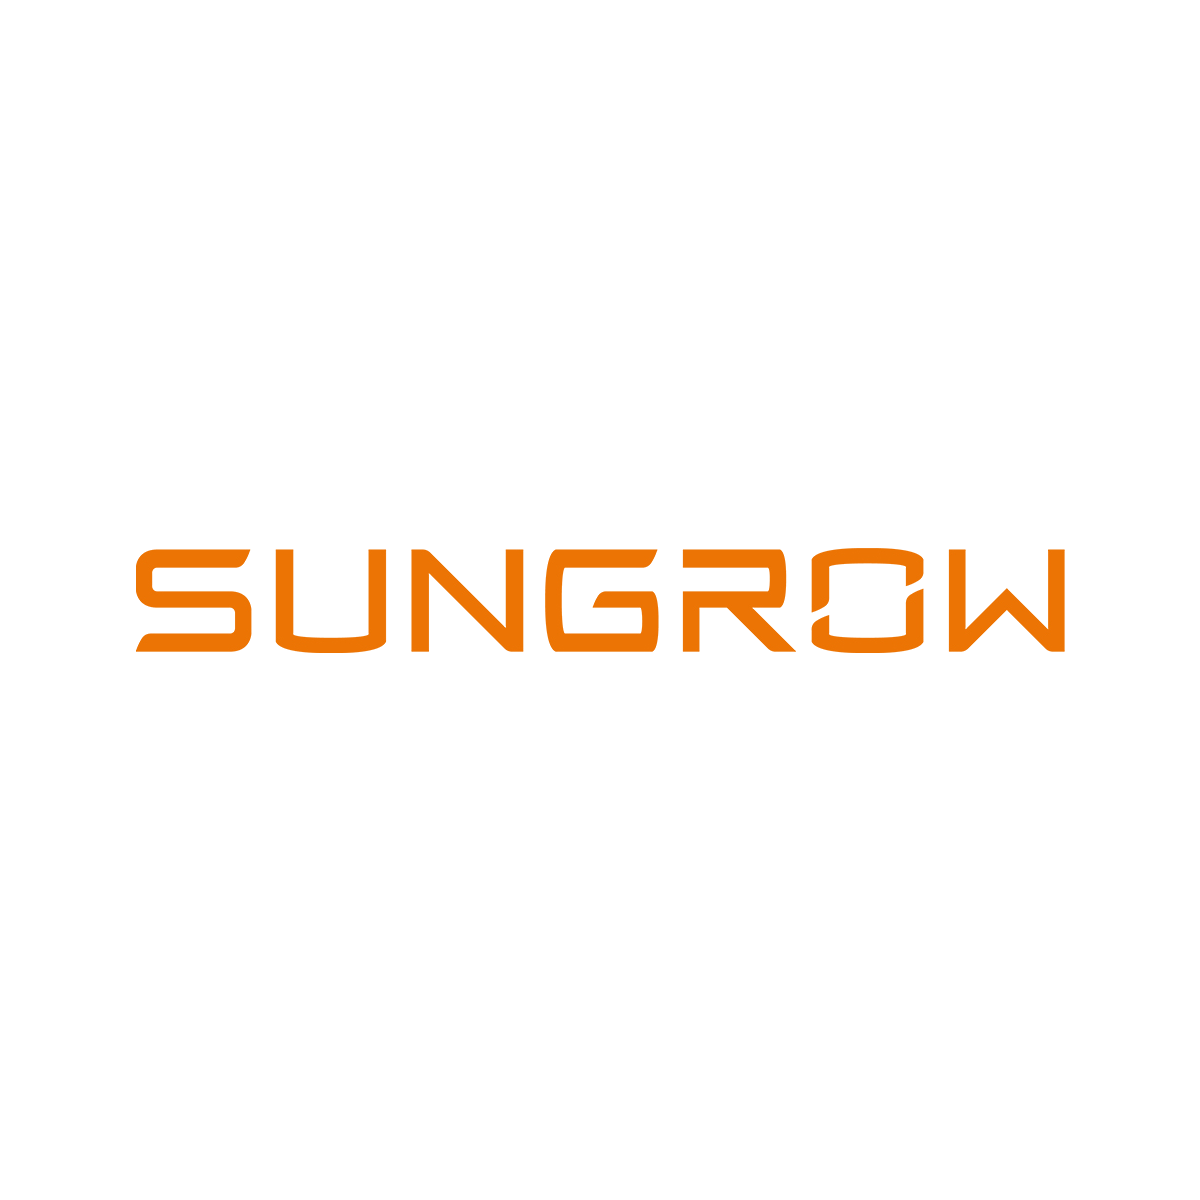 sungrow_logo_3_2e3b.png